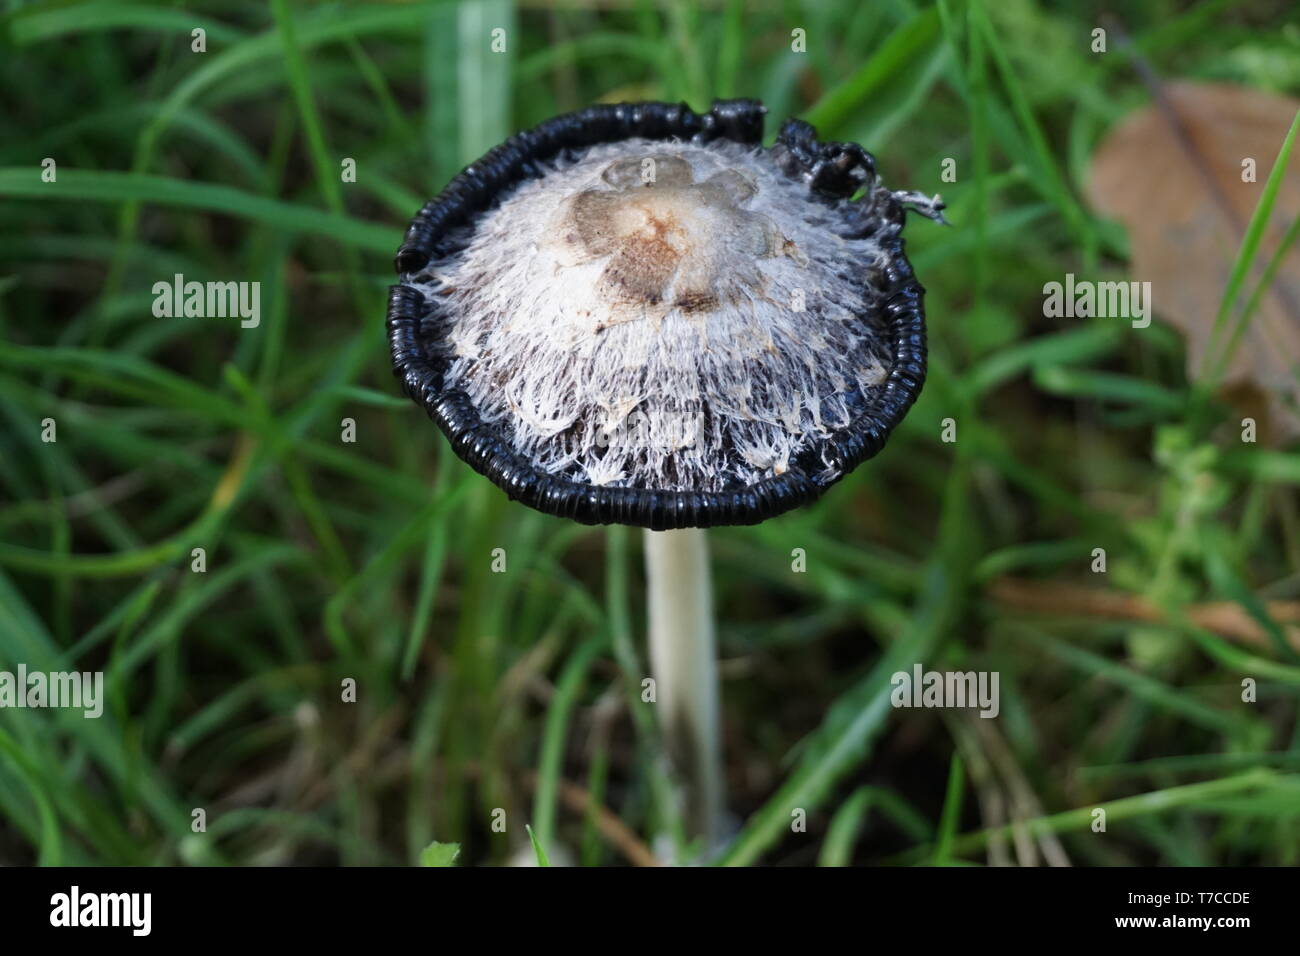 Nahaufnahme eines schwarzen Kruste roting Wild Mushroom im Gras Stockfoto